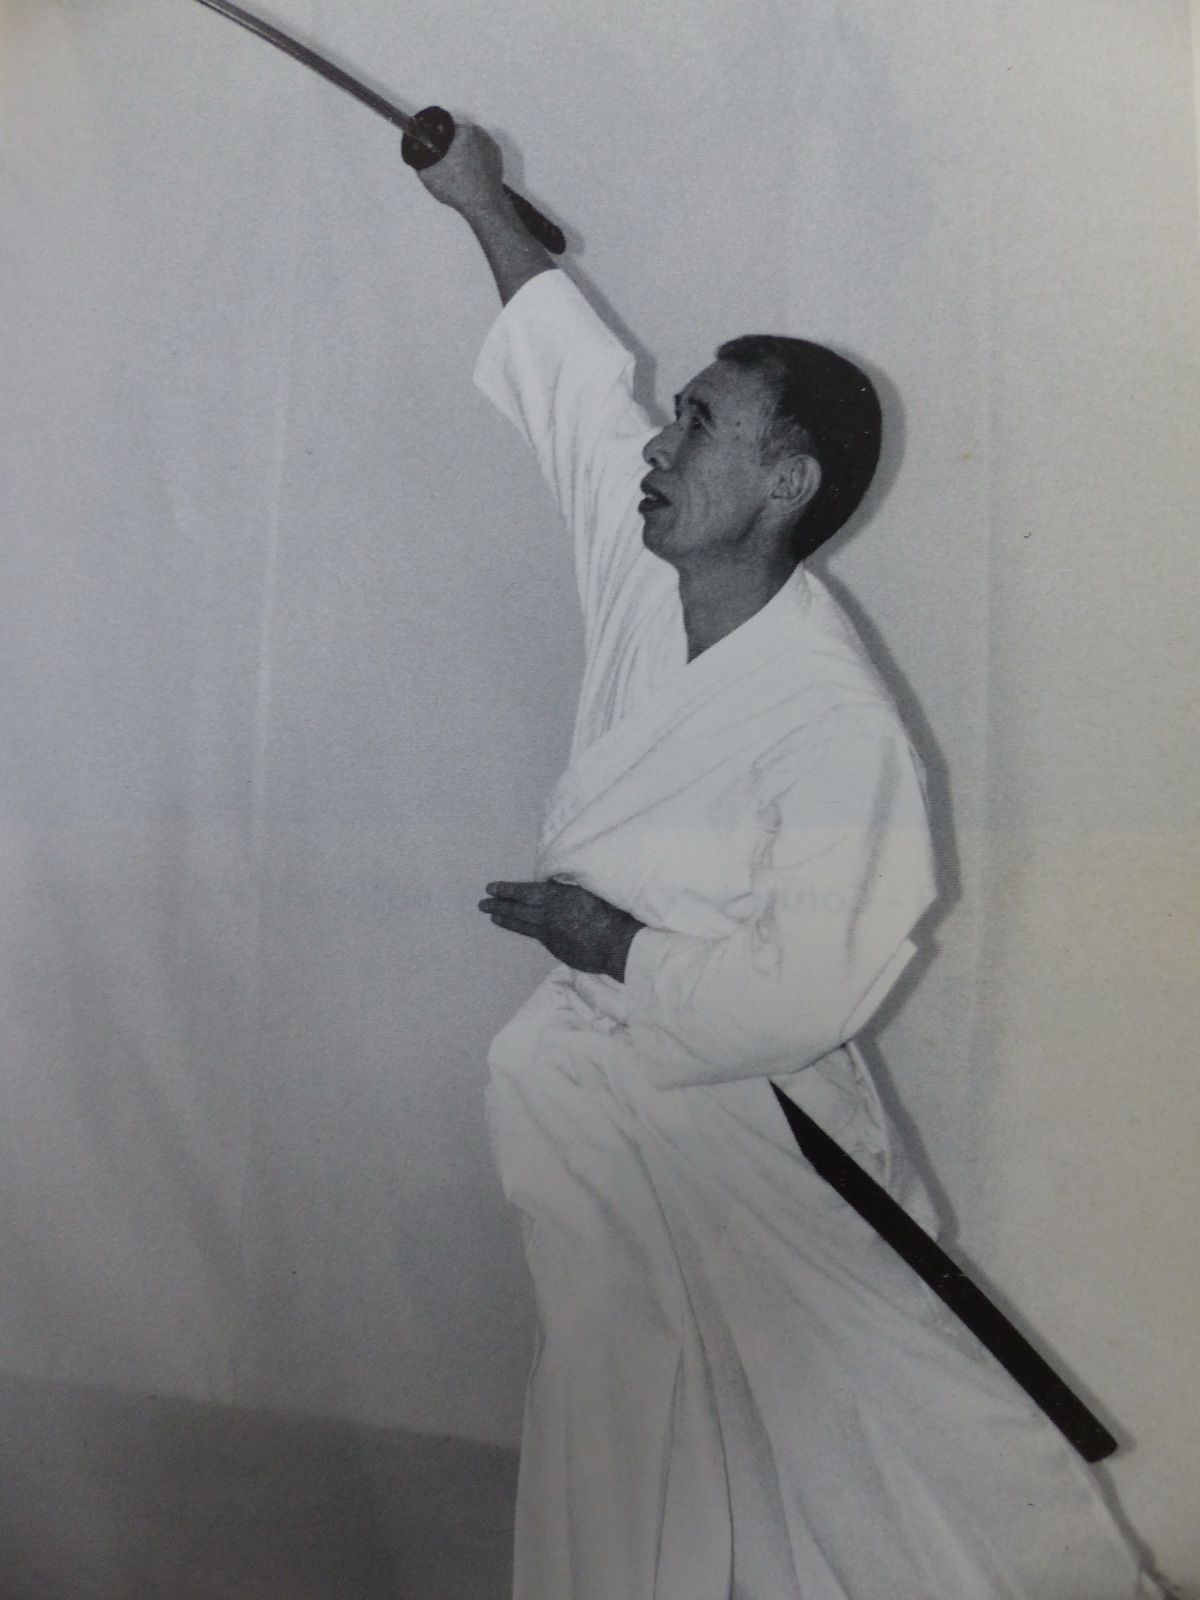 Masamichi Noro maniant le sabre (source : Photo extraite de l'ouvrage de Raymond Murcia)